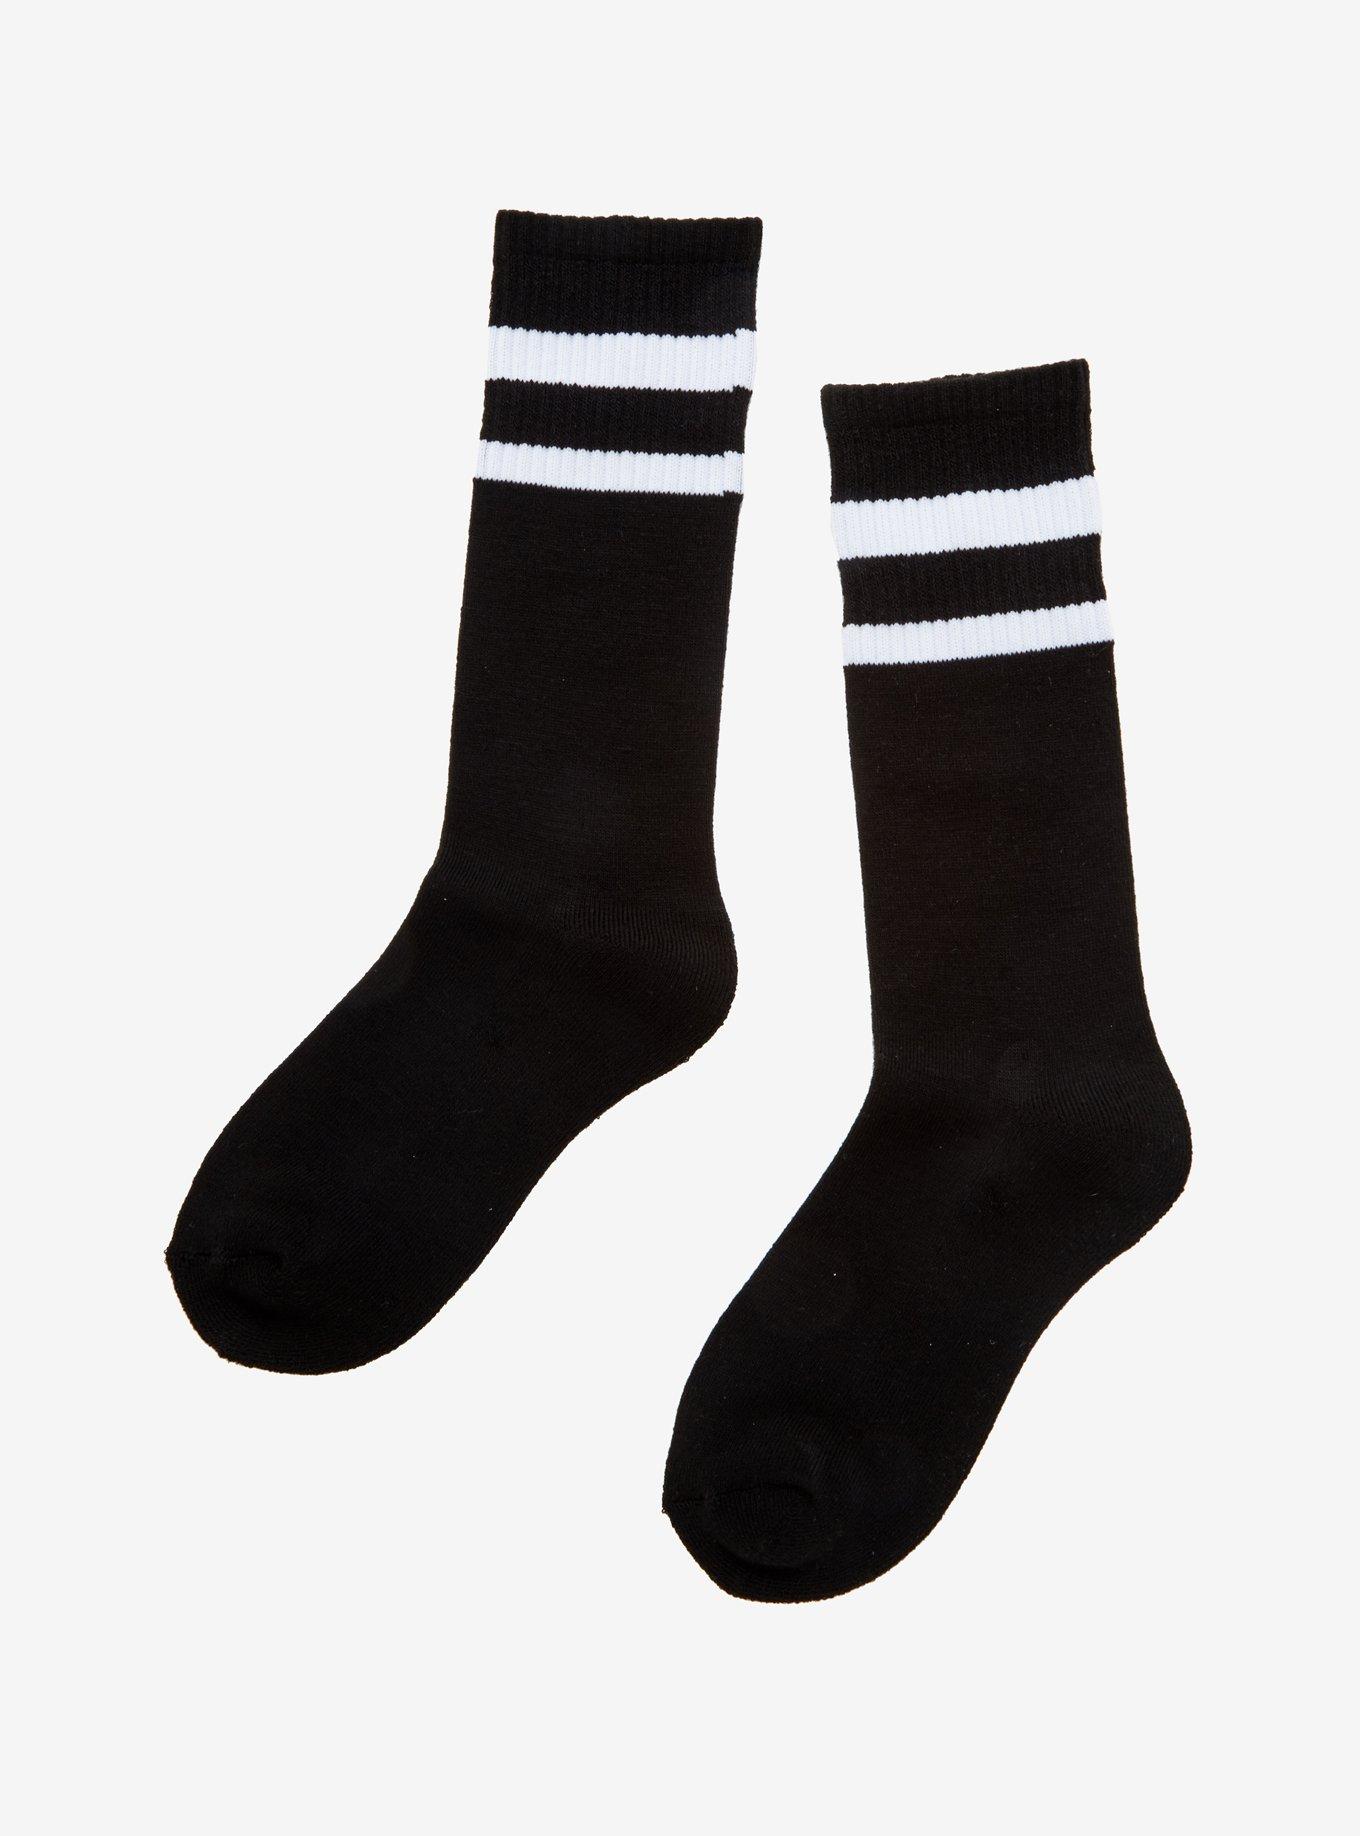 Blackheart Black & White Stripe Varsity Crew Socks, , hi-res